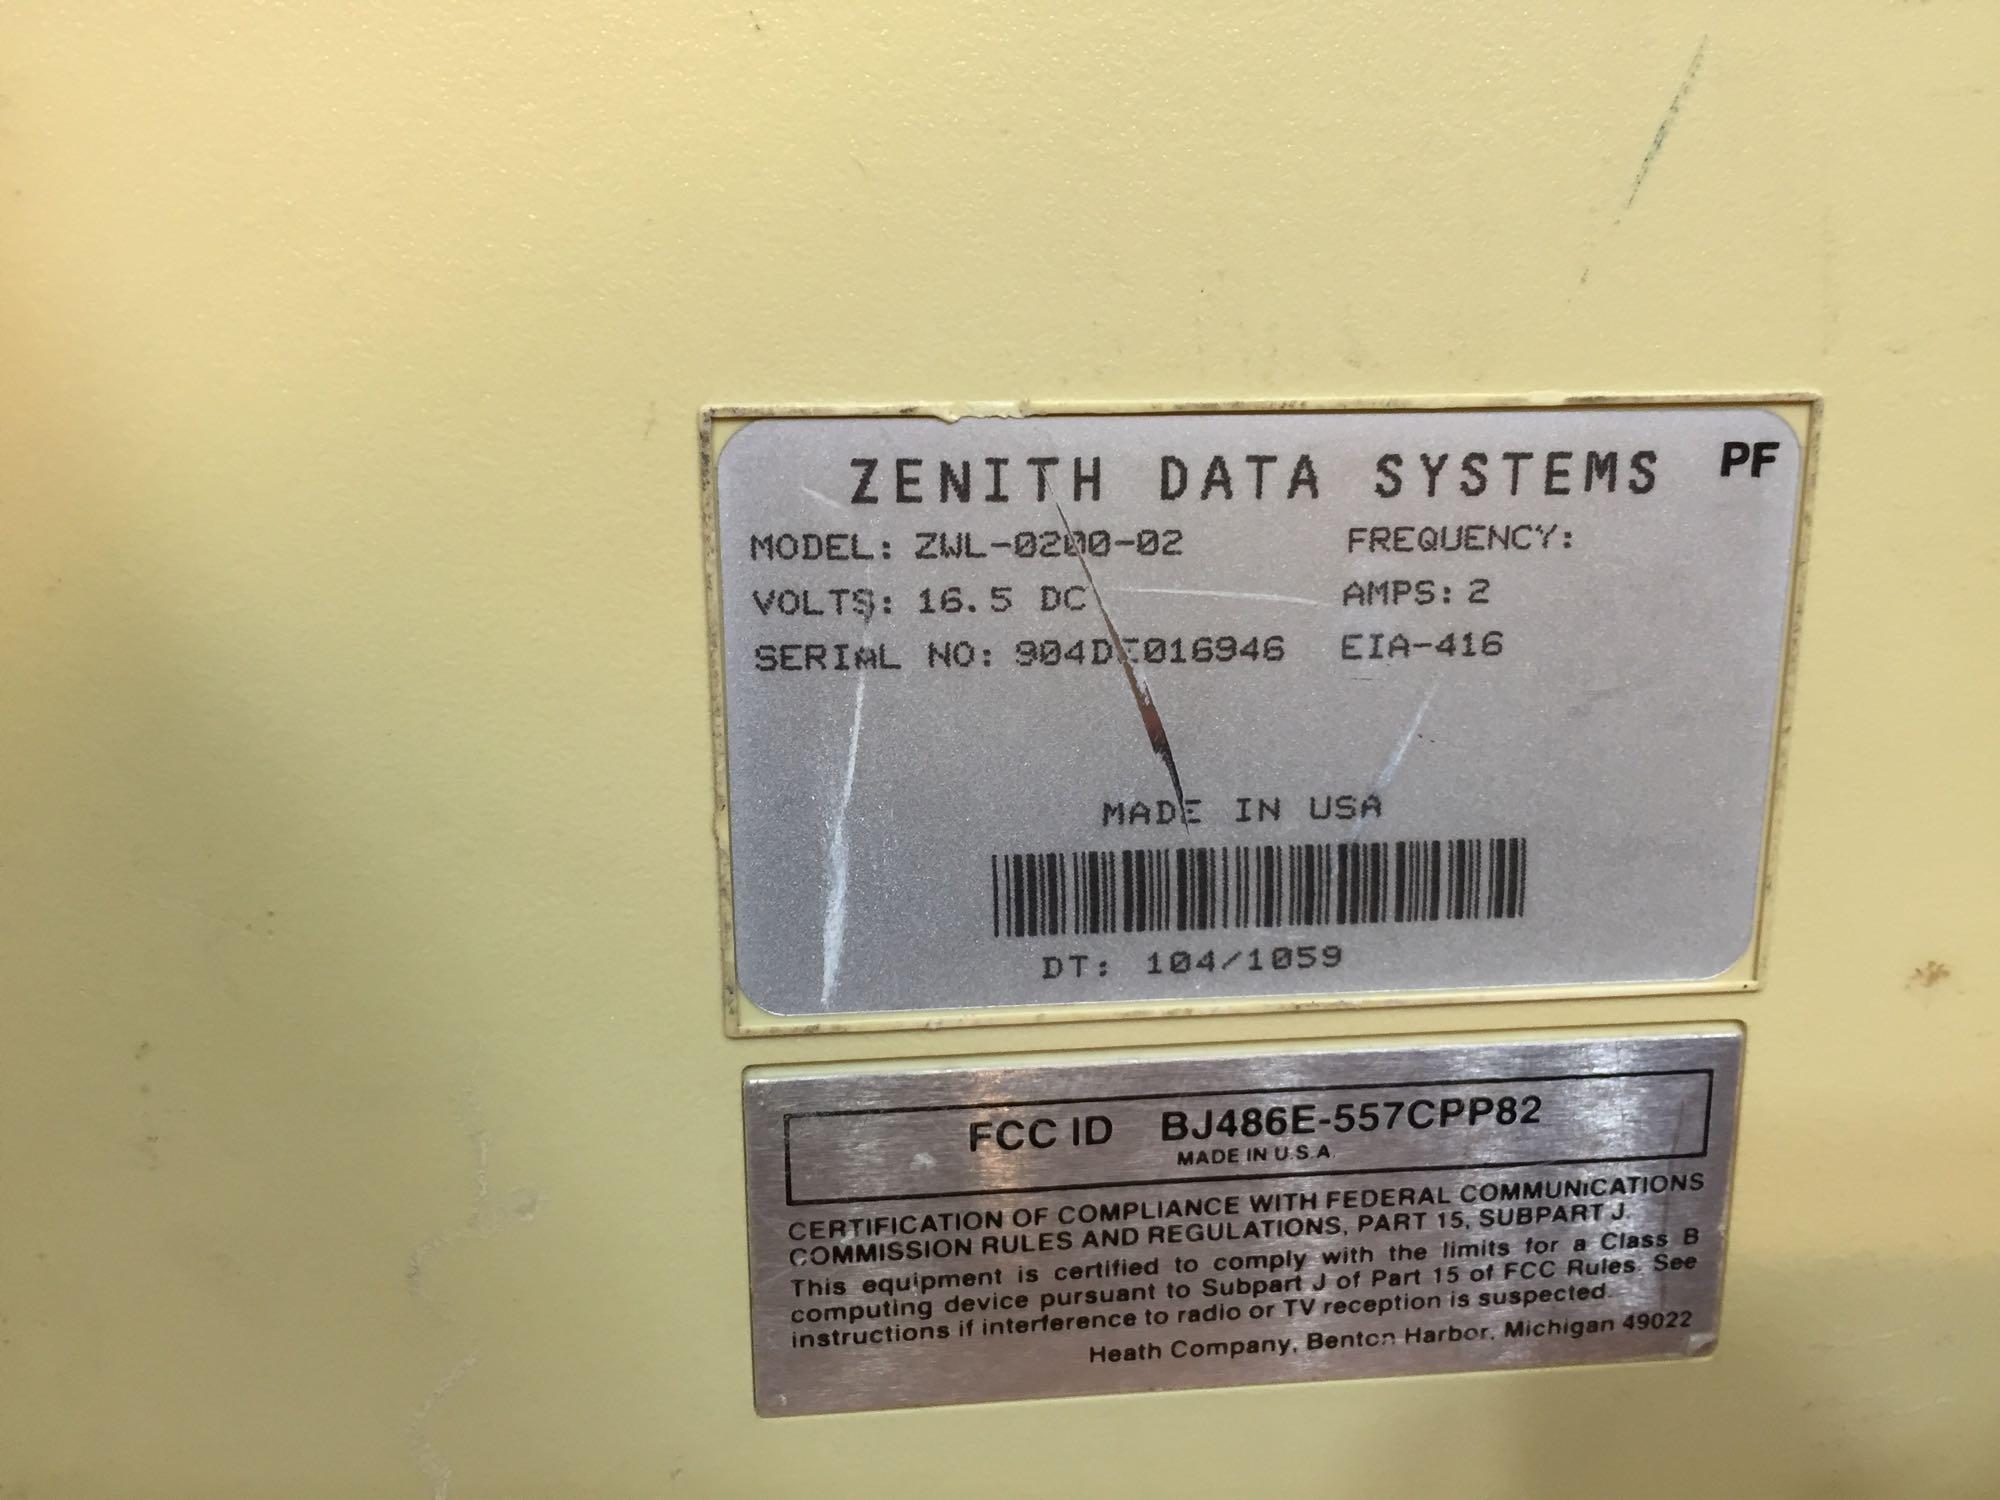 Zenith SuperSport 286 Vintage Laptop Computer